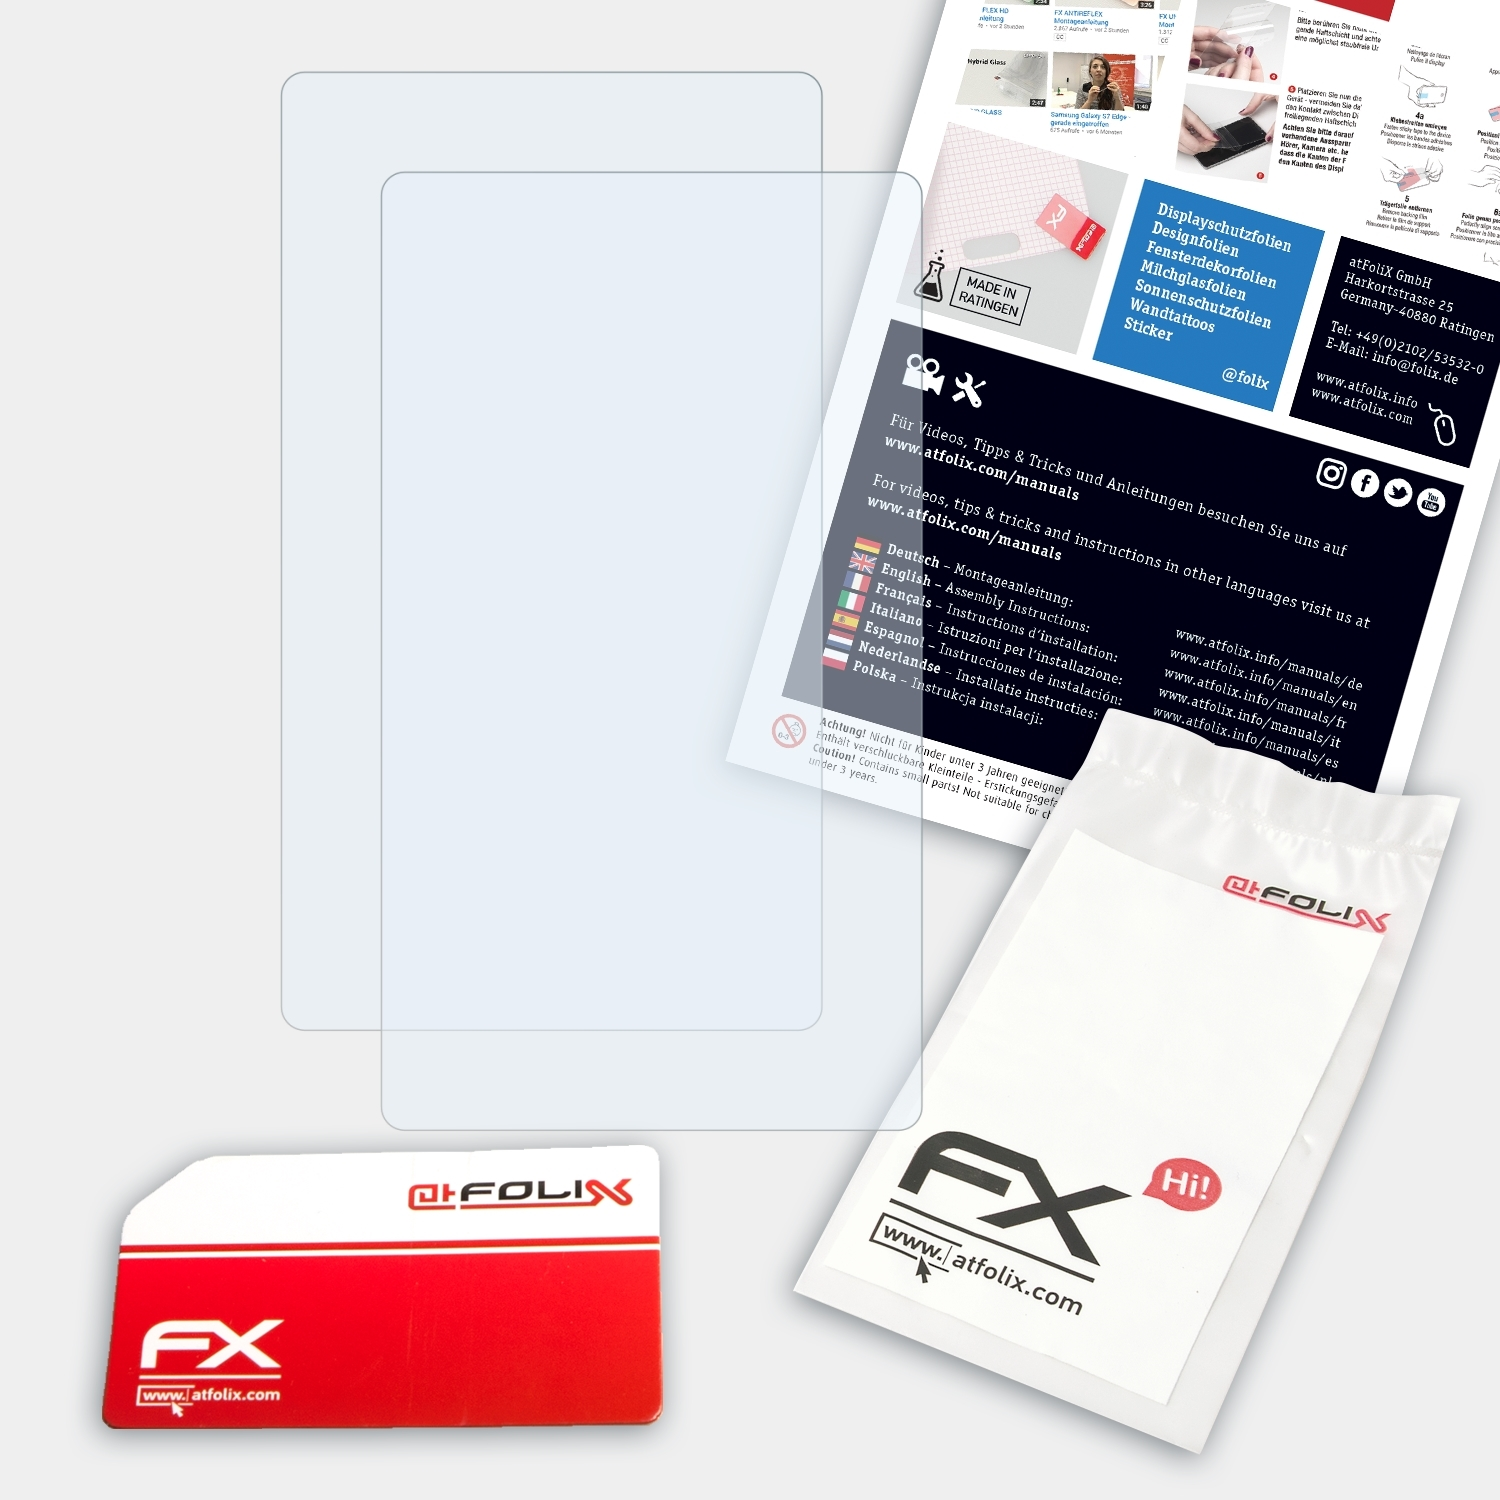 Displayschutz(für F50) 2x Sportstech Laufband FX-Clear ATFOLIX